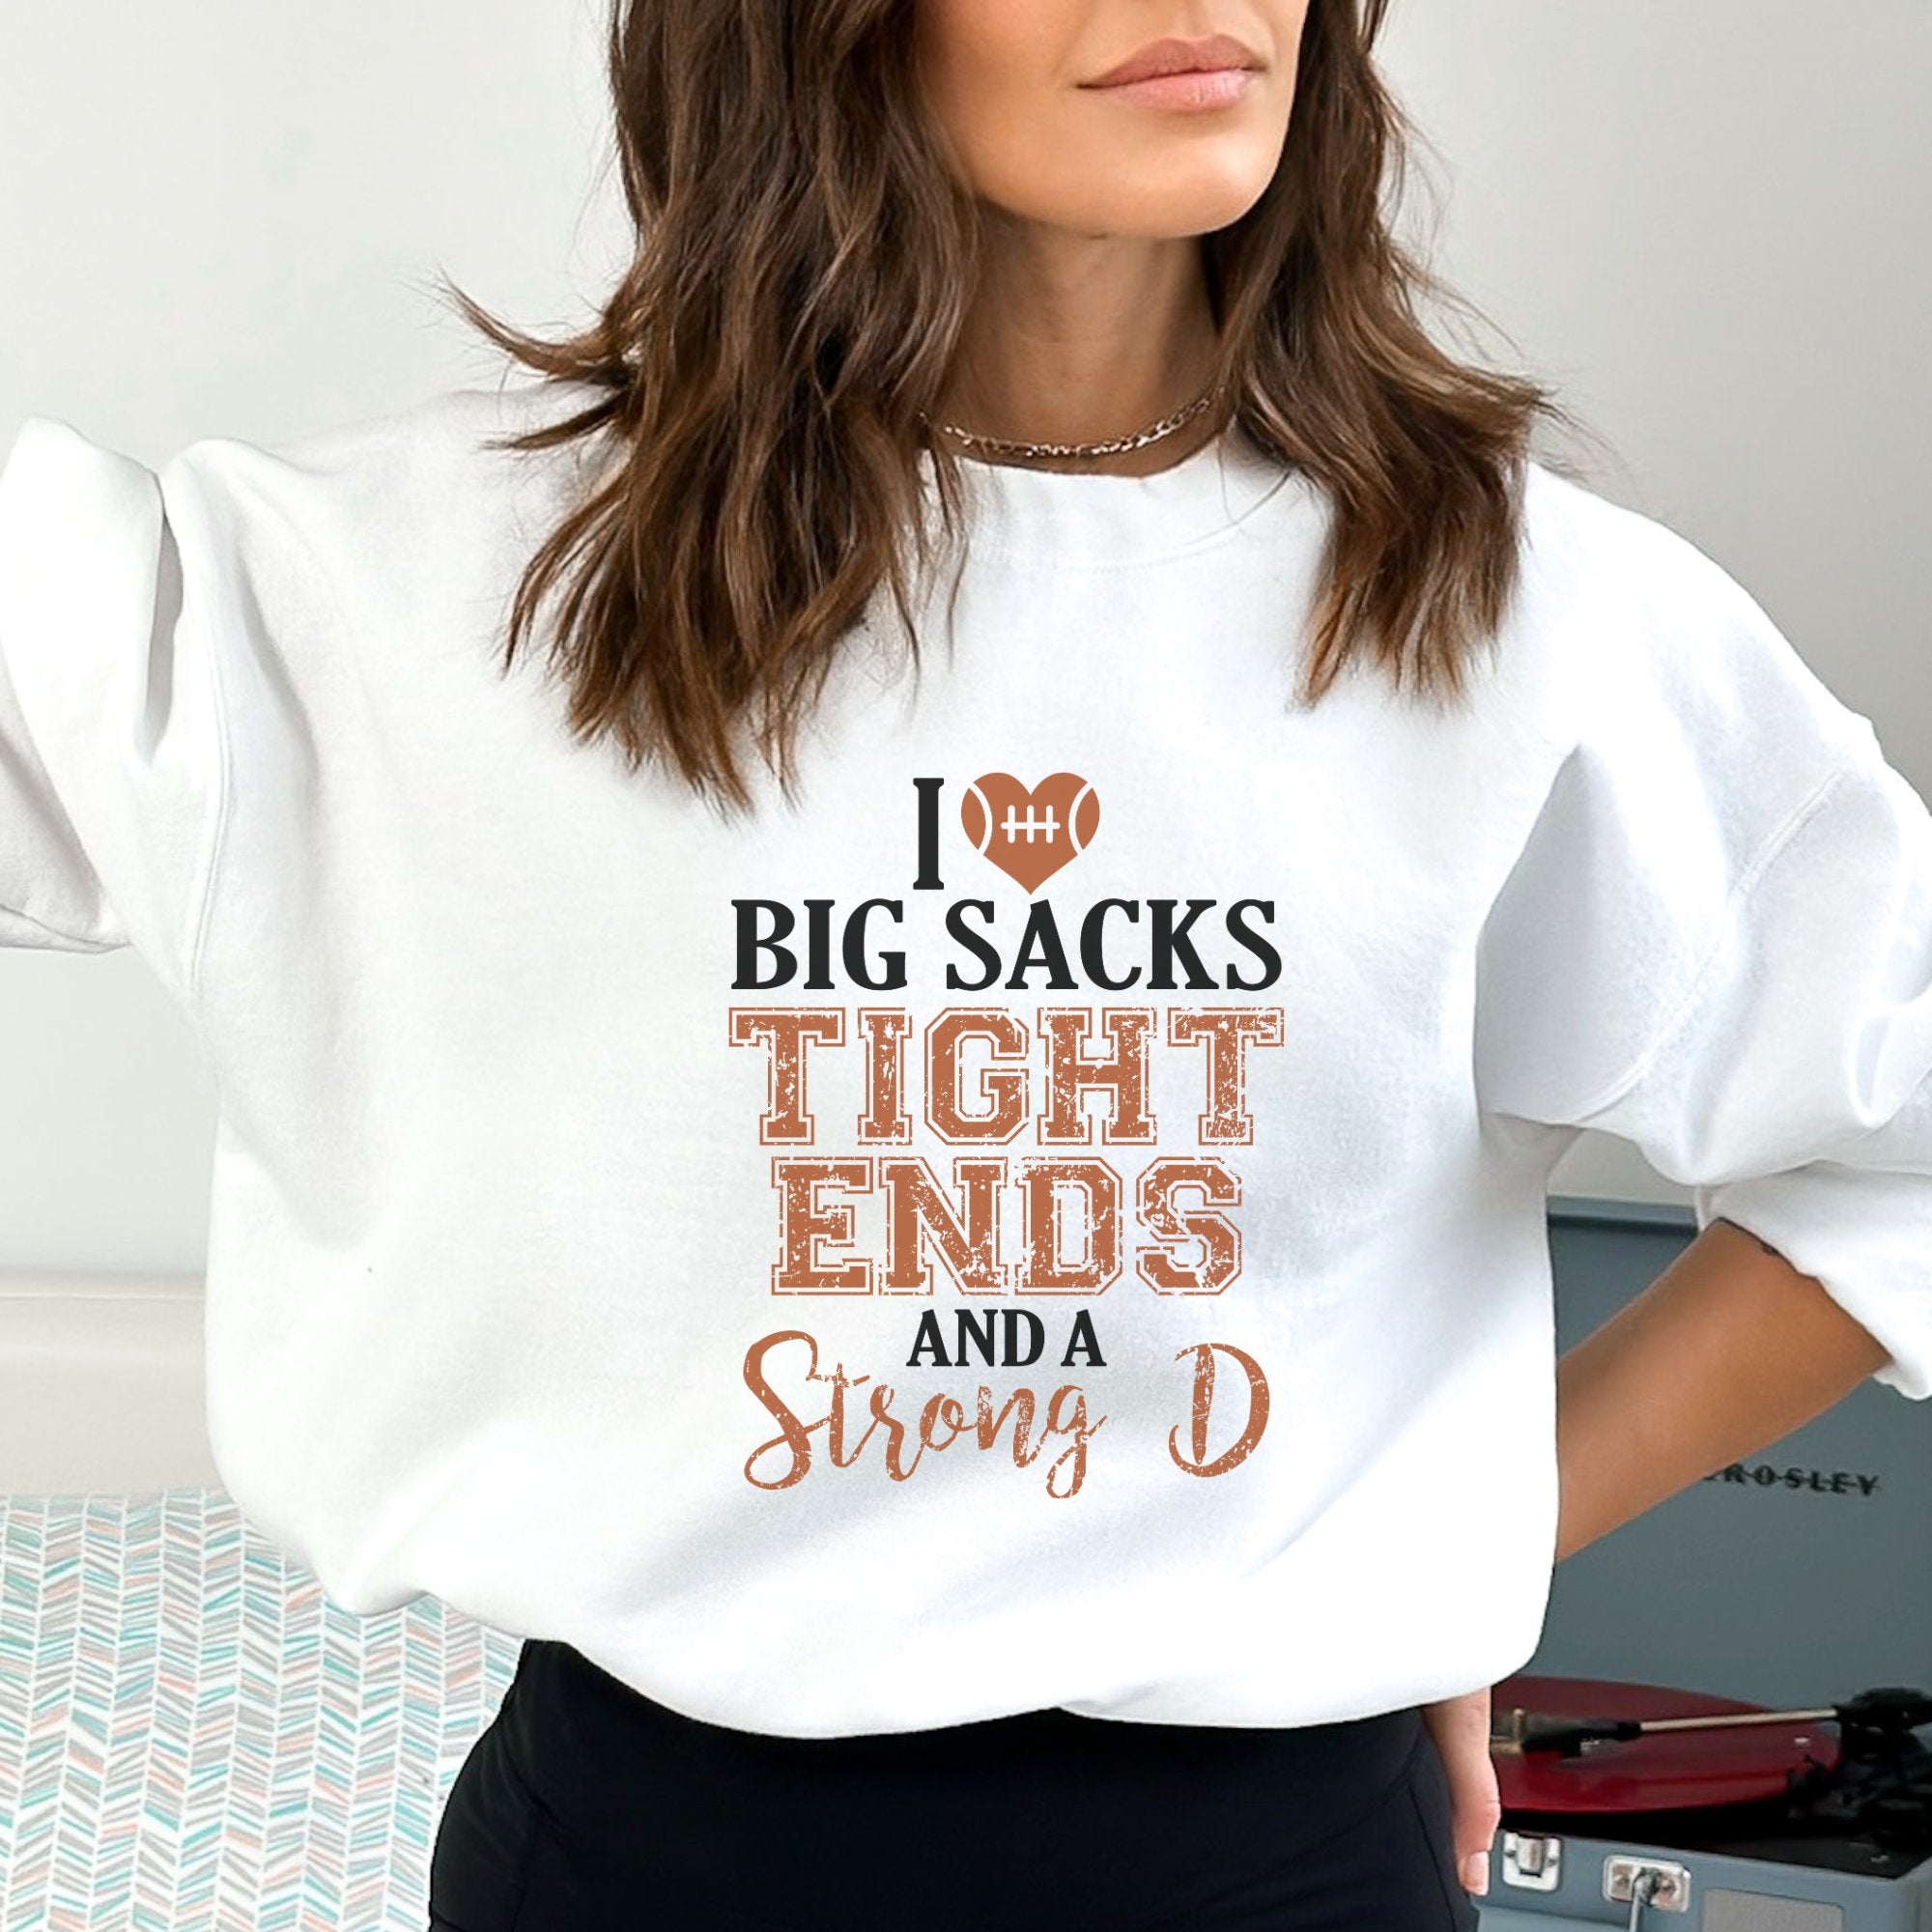 I Love Big Sacks Football Graphic Sweatshirt - Trendznmore